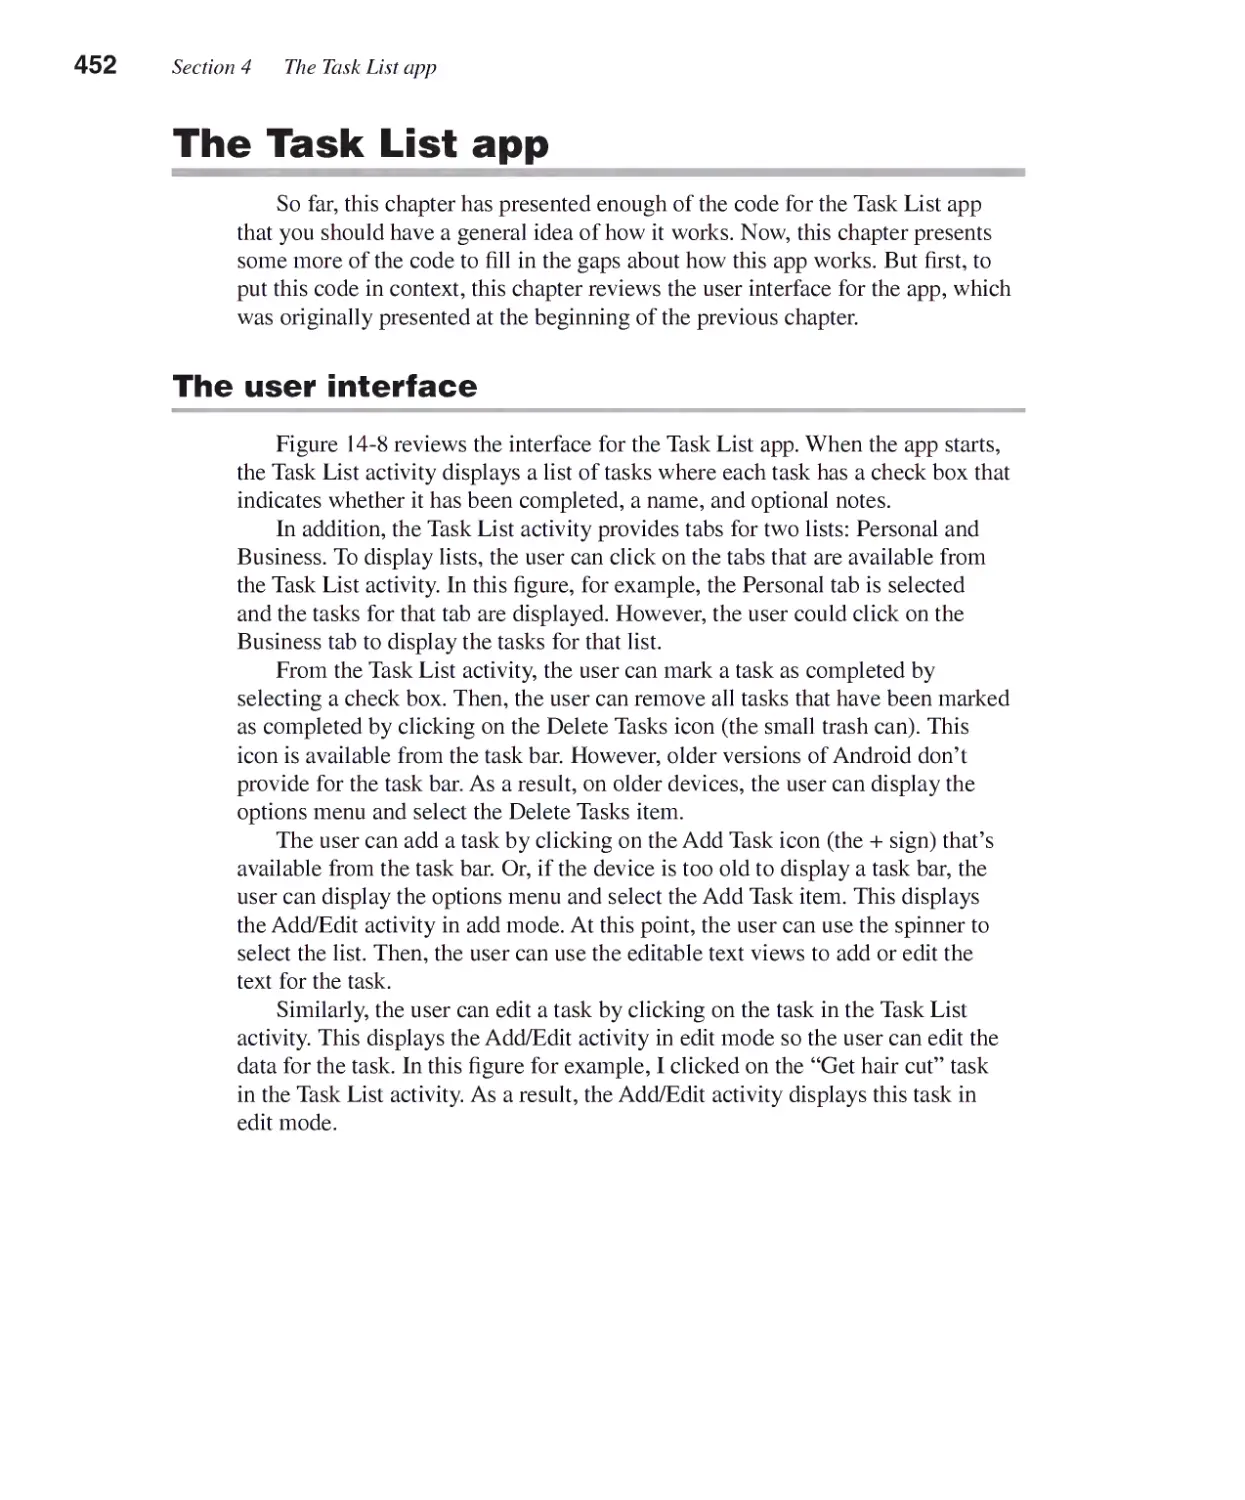 The Task List App